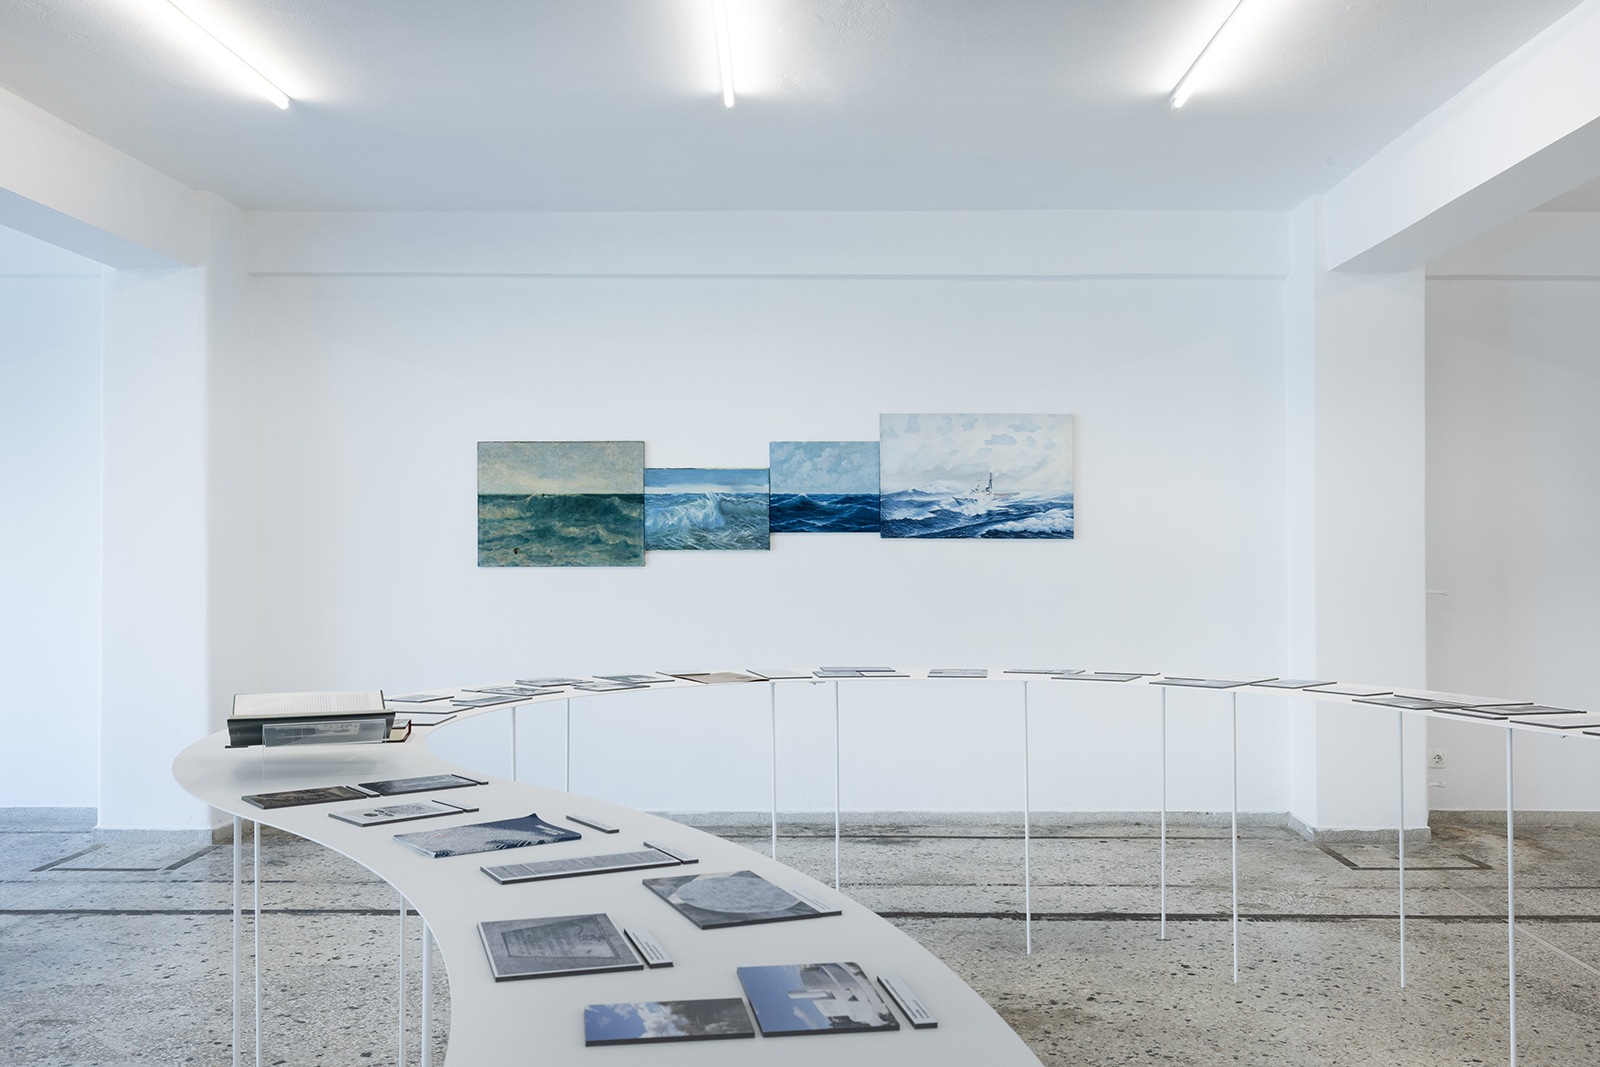 Archisearch Exhibition Design “The Sea Around Us” at TAVROS art space | Evita Fanou Architecture & Design